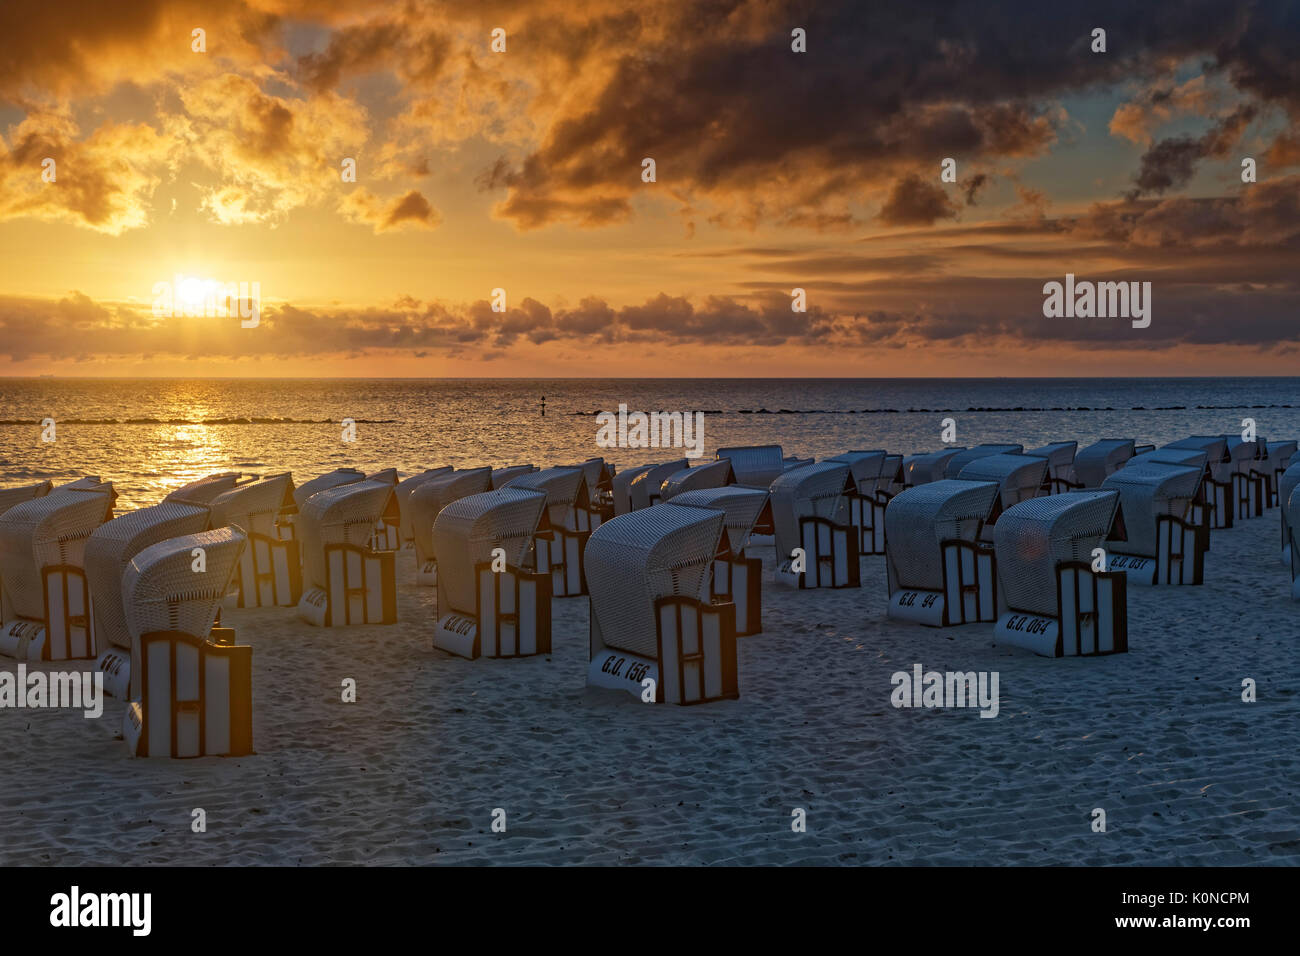 Germany, Mecklenburg-Western Pomerania, Baltic sea seaside resort Sellin, Hooded beach chairs on the beach Stock Photo